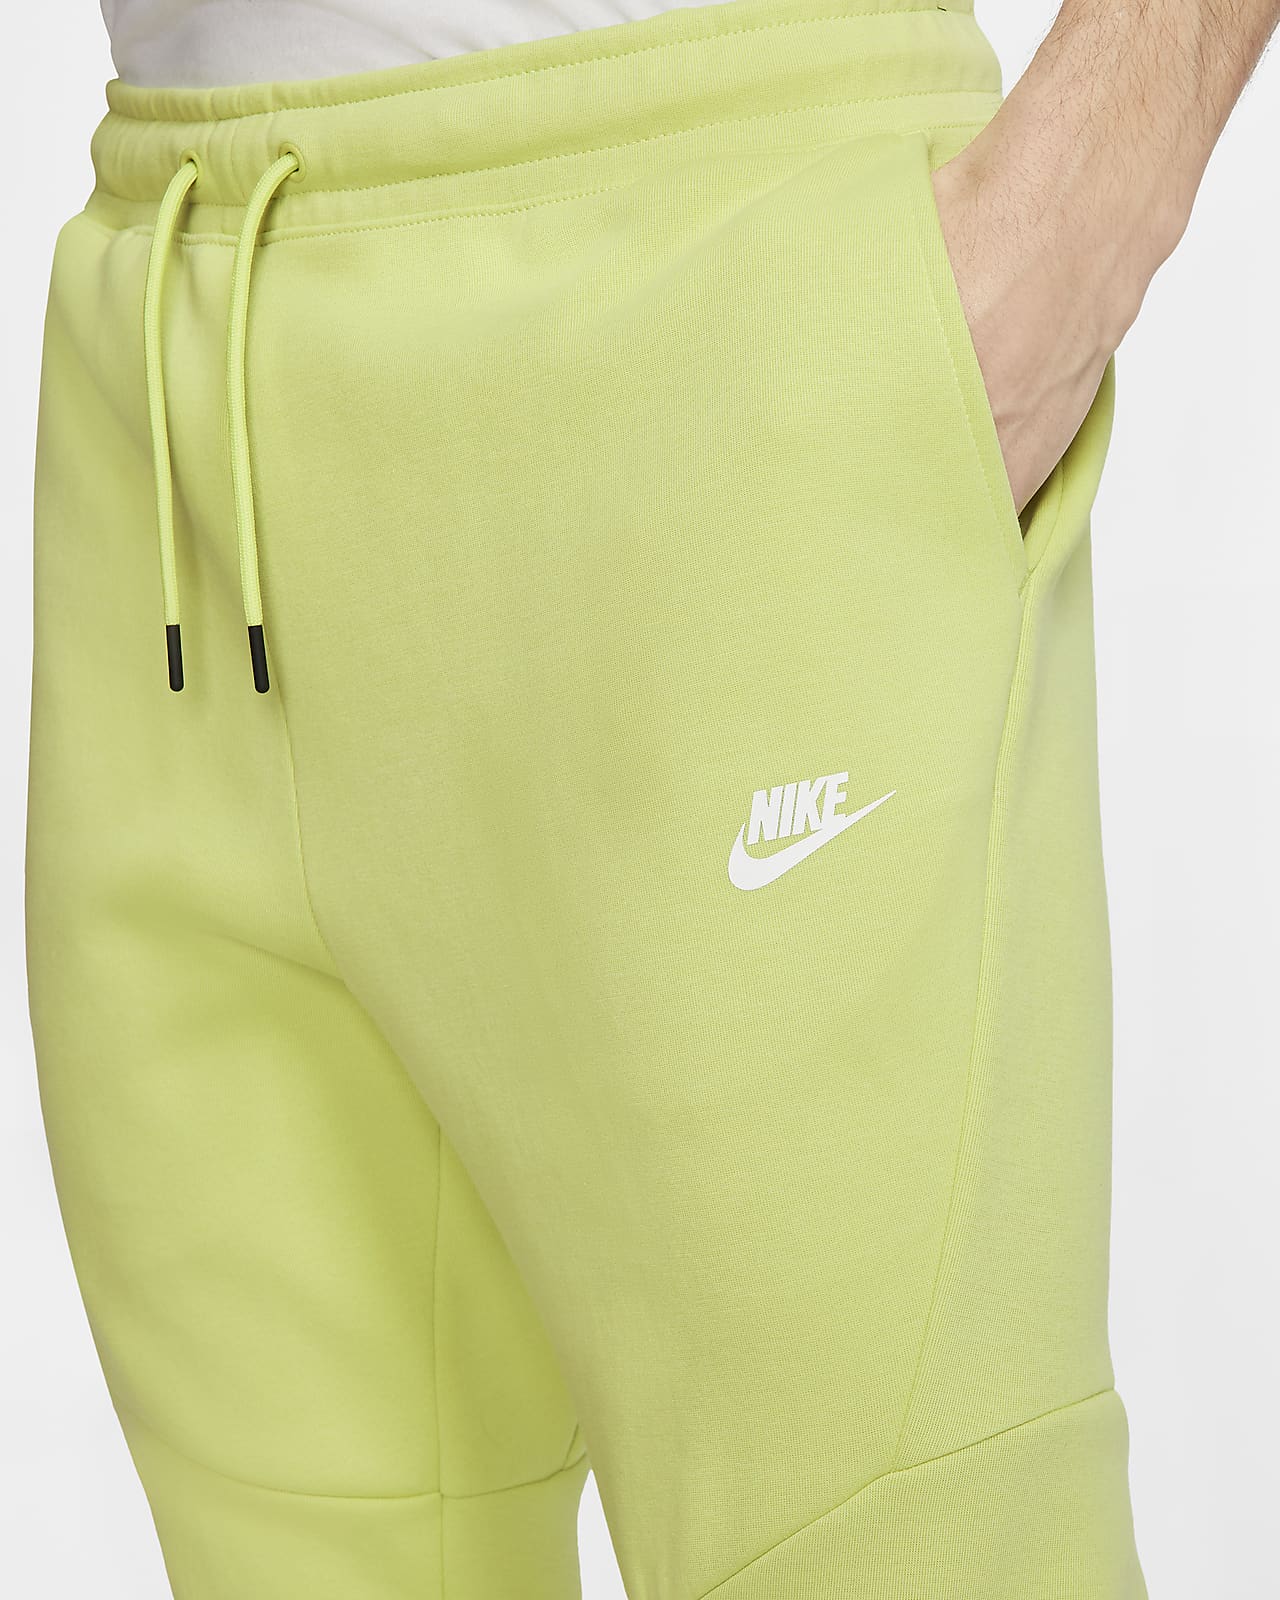 nike air fleece shorts yellow